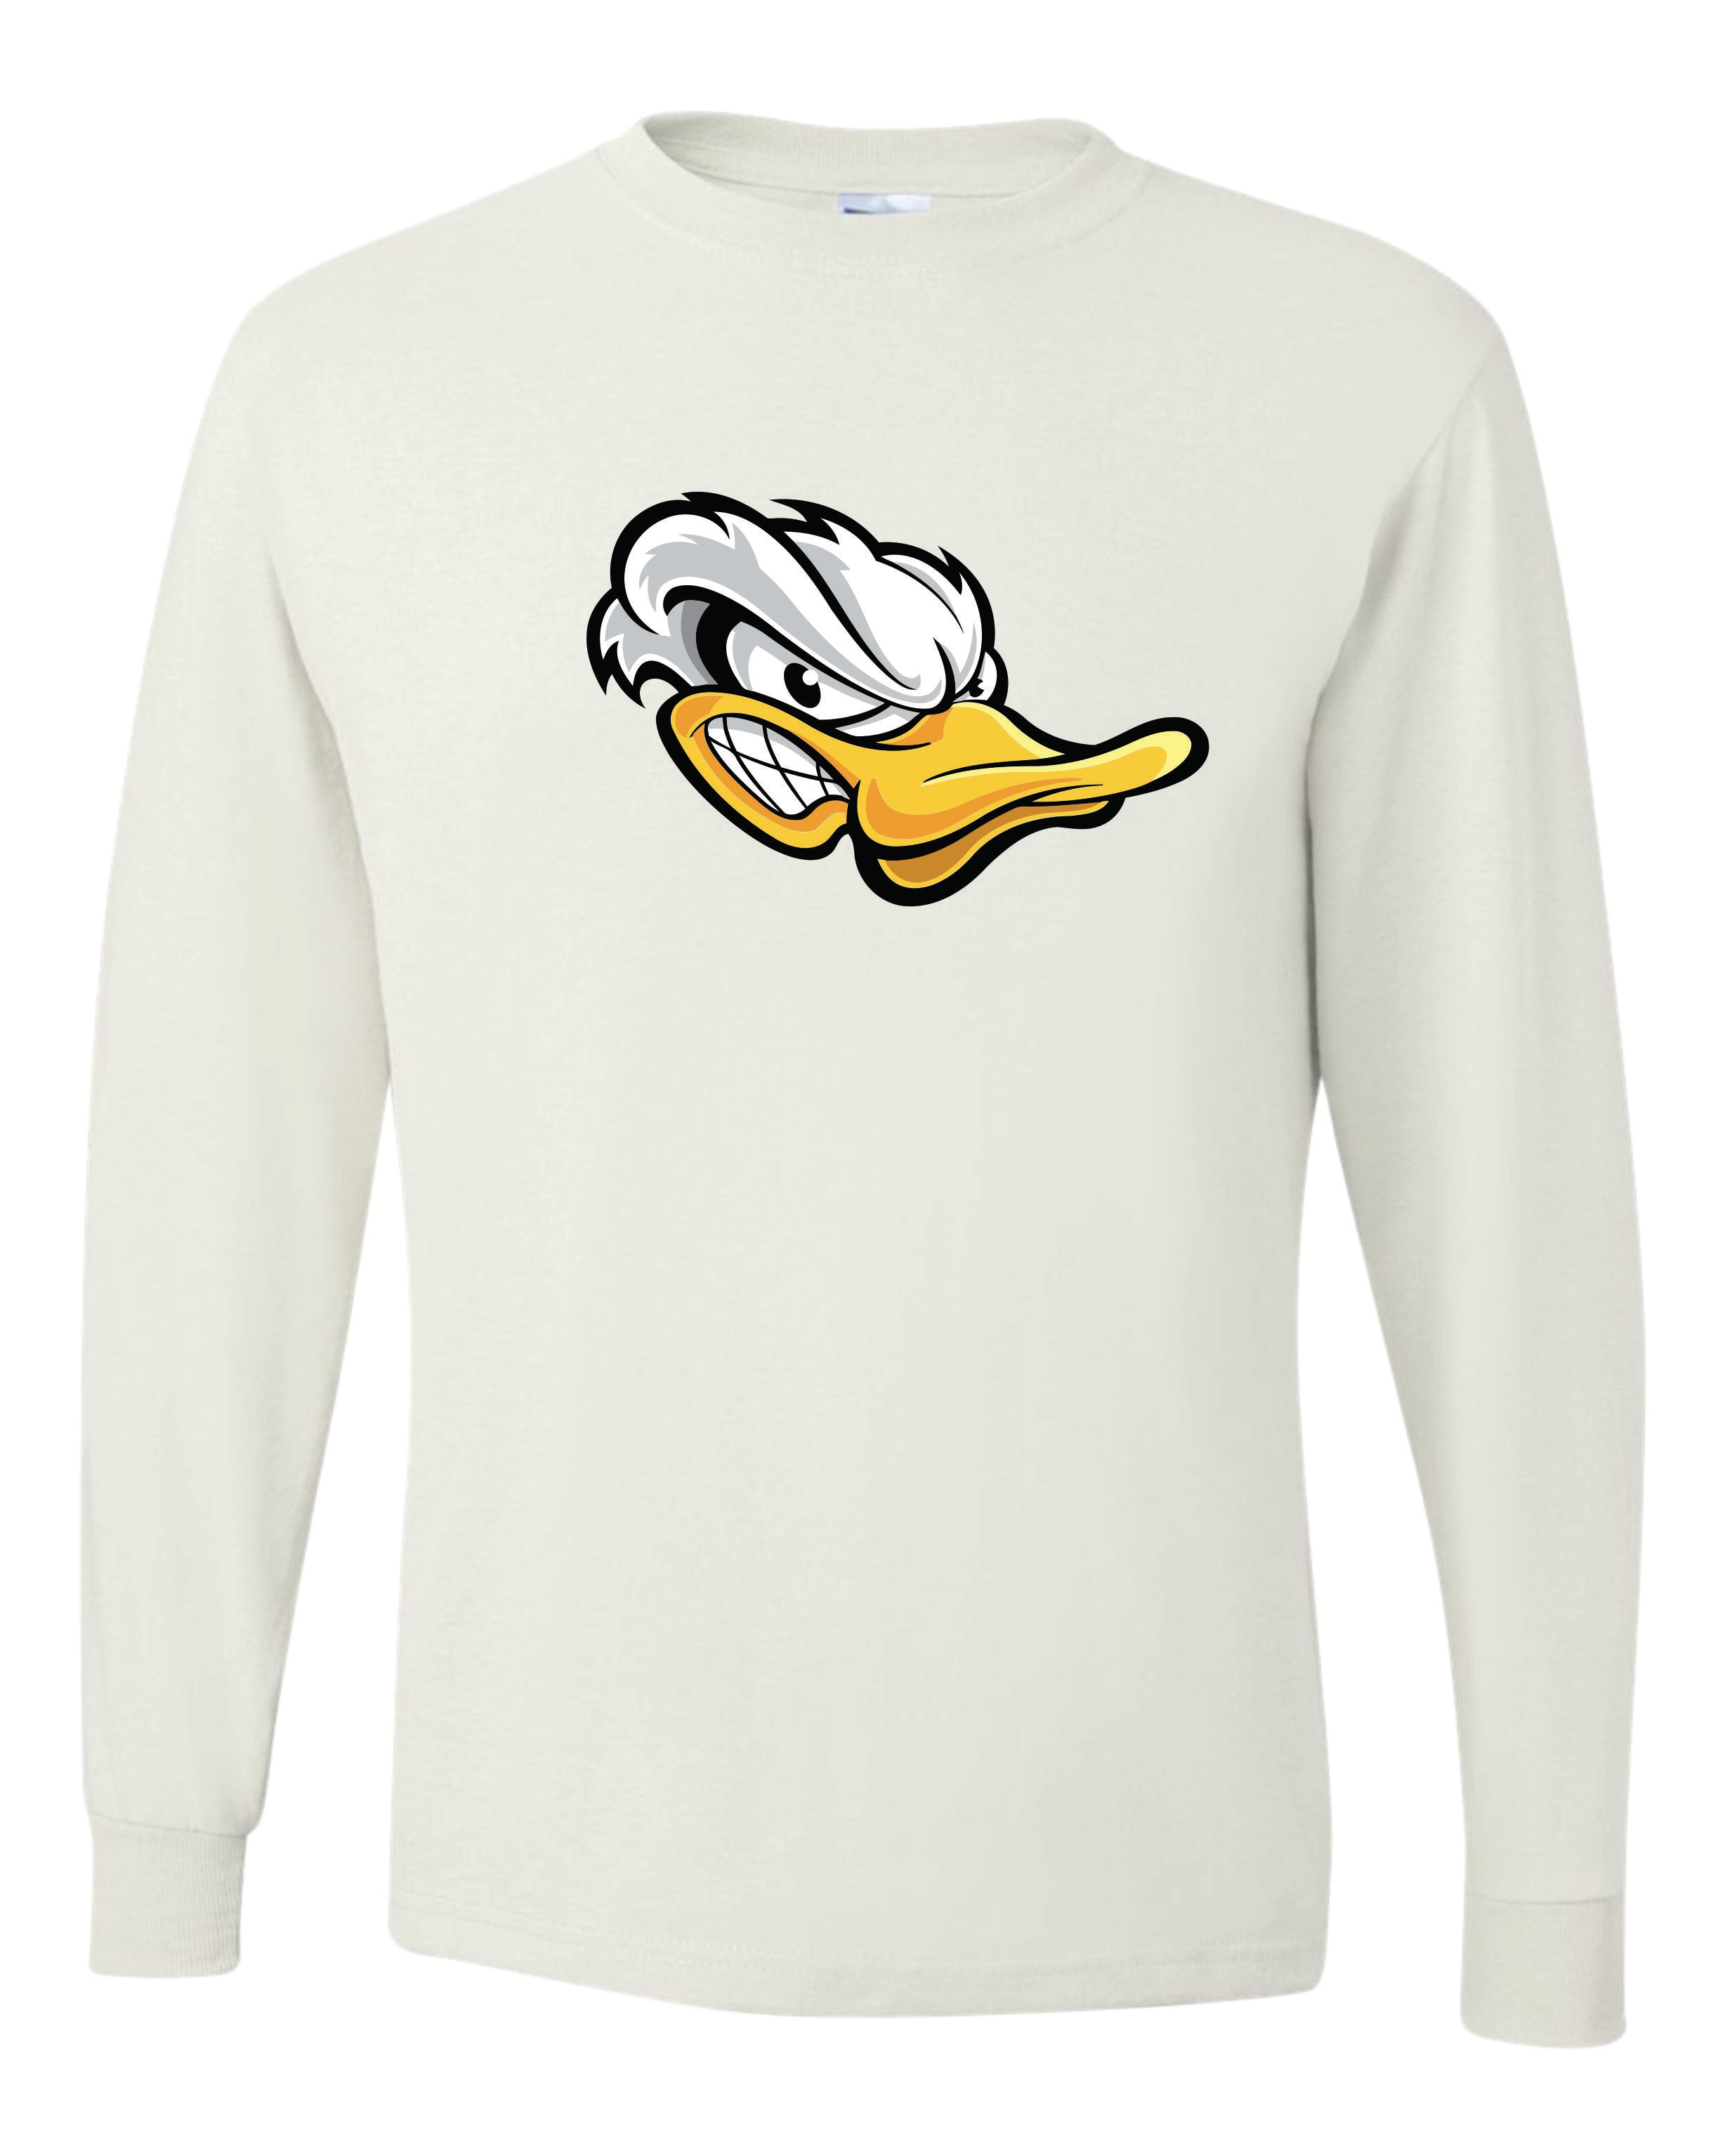 Ducks 50/50 Long Sleeve T-Shirts